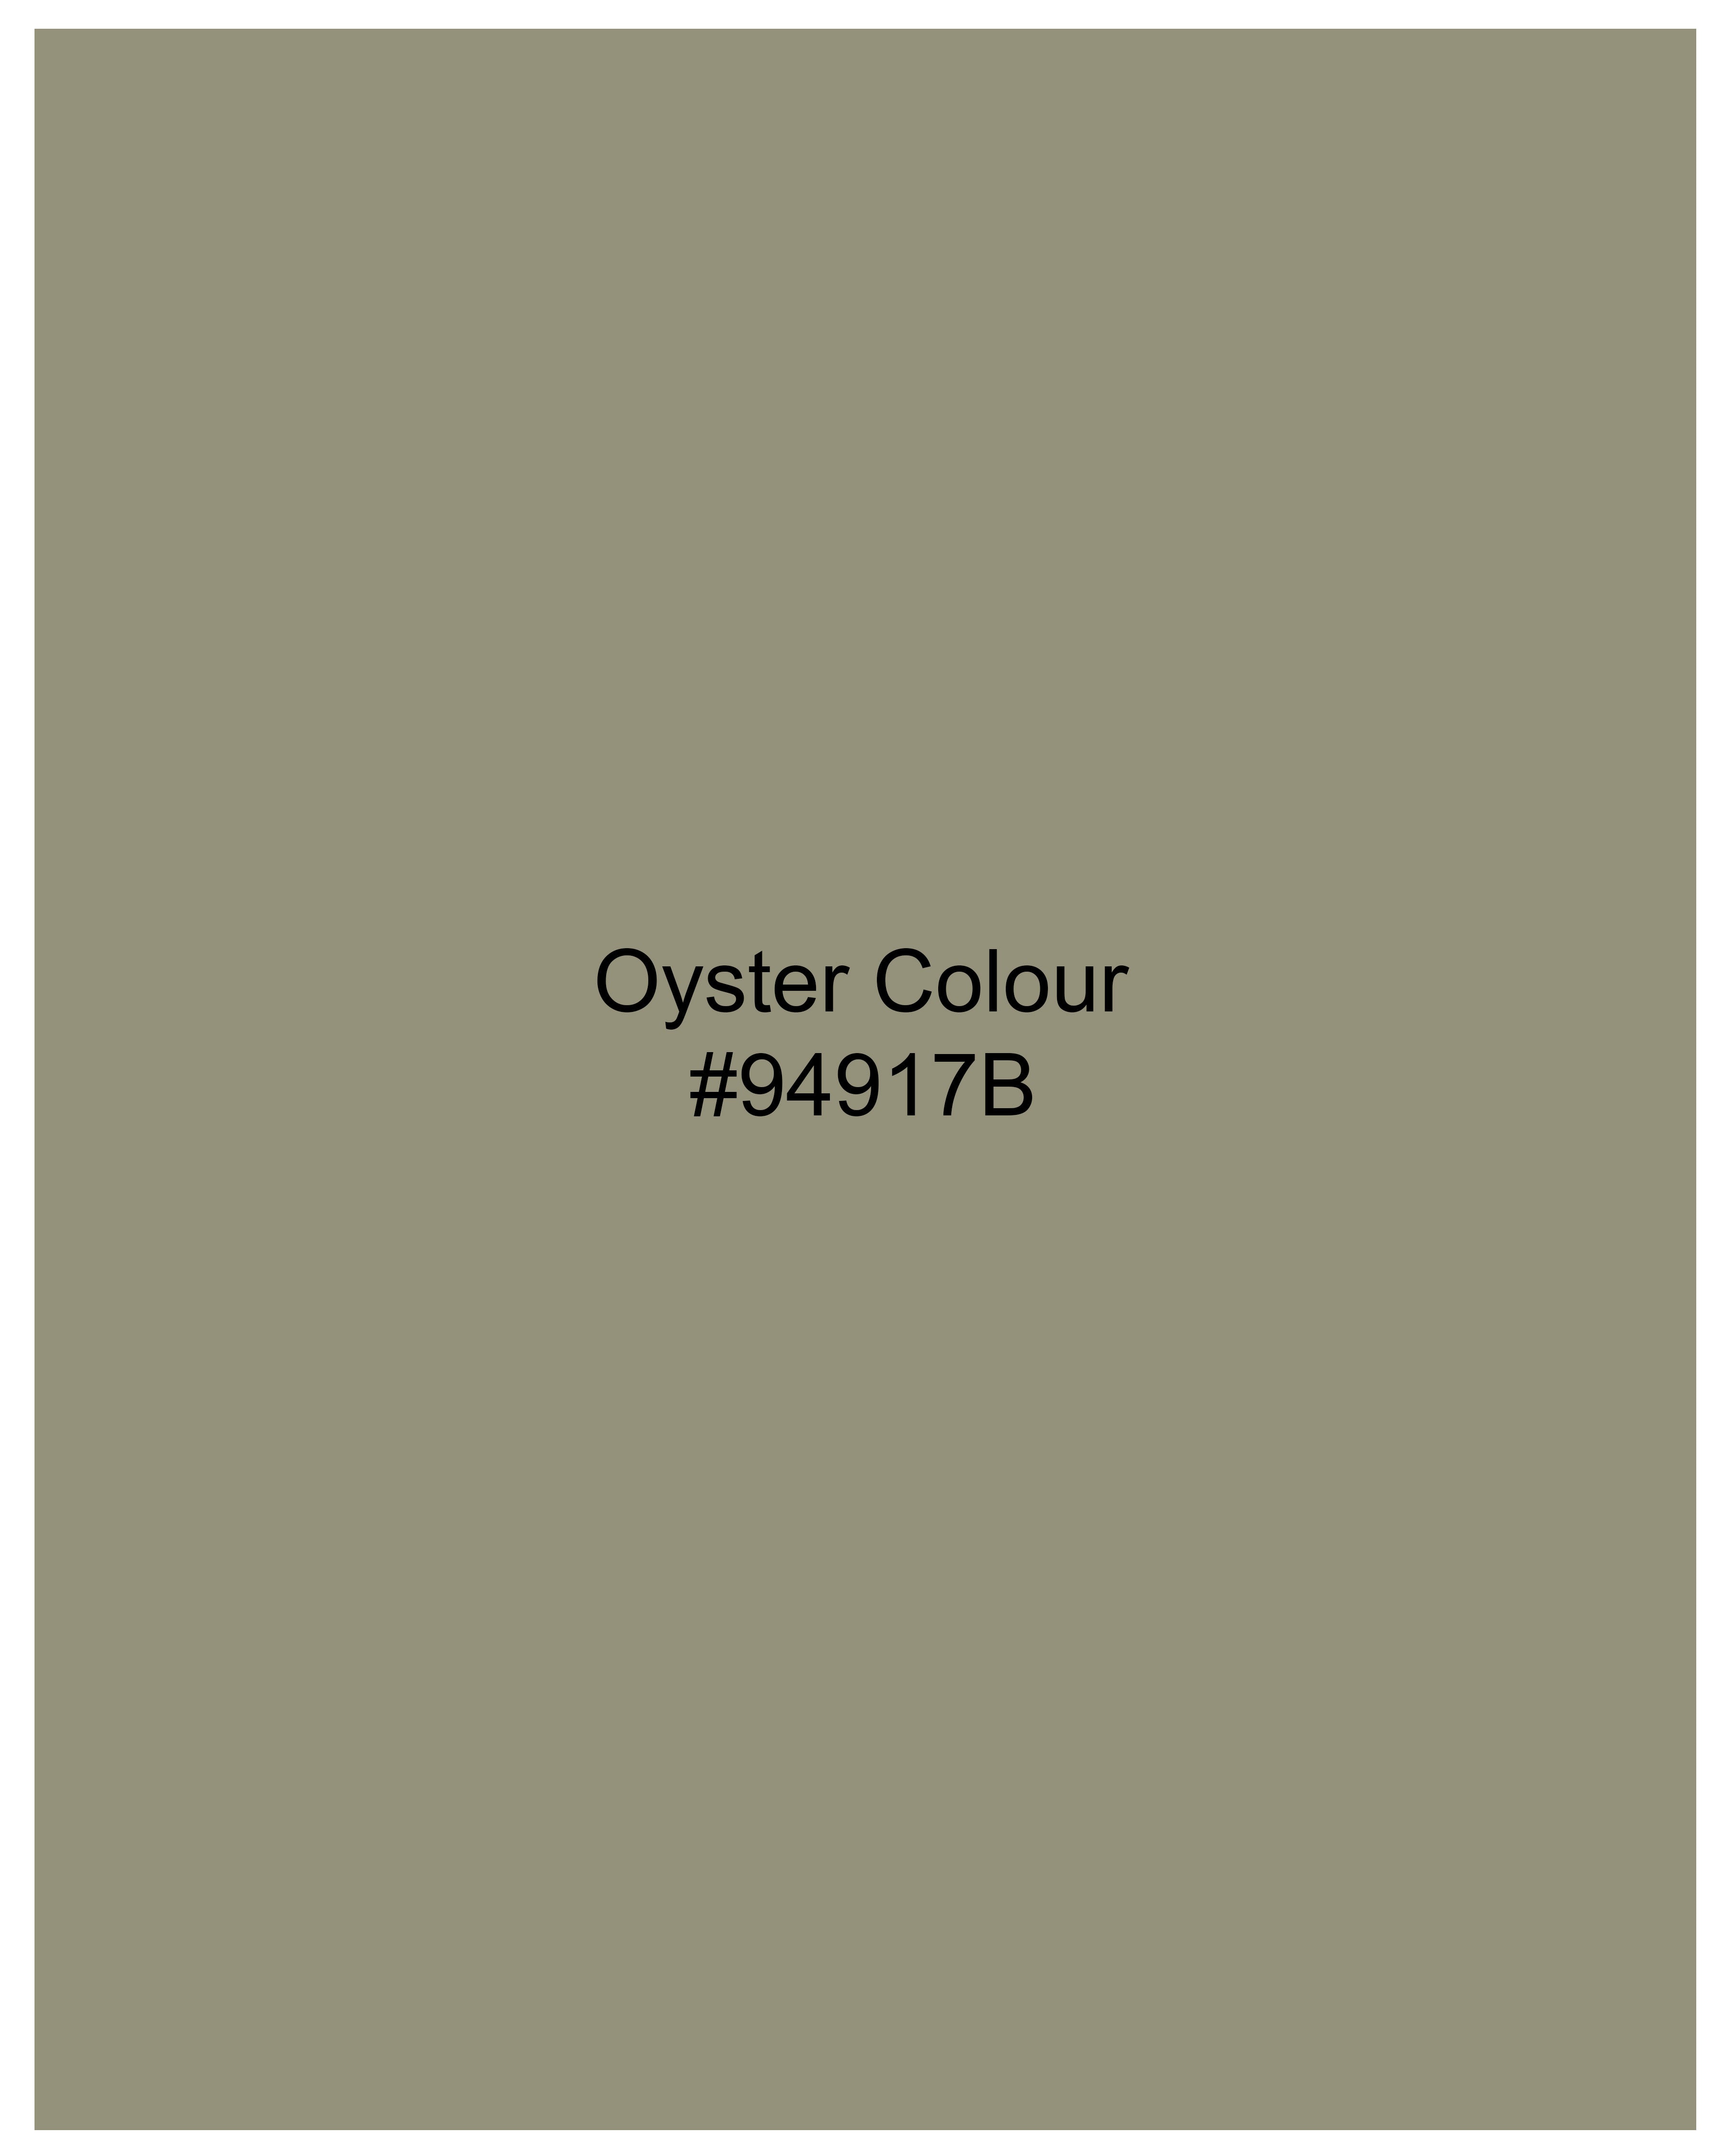 Oyster Green Premium Cotton Shirt  8560-38,8560-H-38,8560-39,8560-H-39,8560-40,8560-H-40,8560-42,8560-H-42,8560-44,8560-H-44,8560-46,8560-H-46,8560-48,8560-H-48,8560-50,8560-H-50,8560-52,8560-H-52